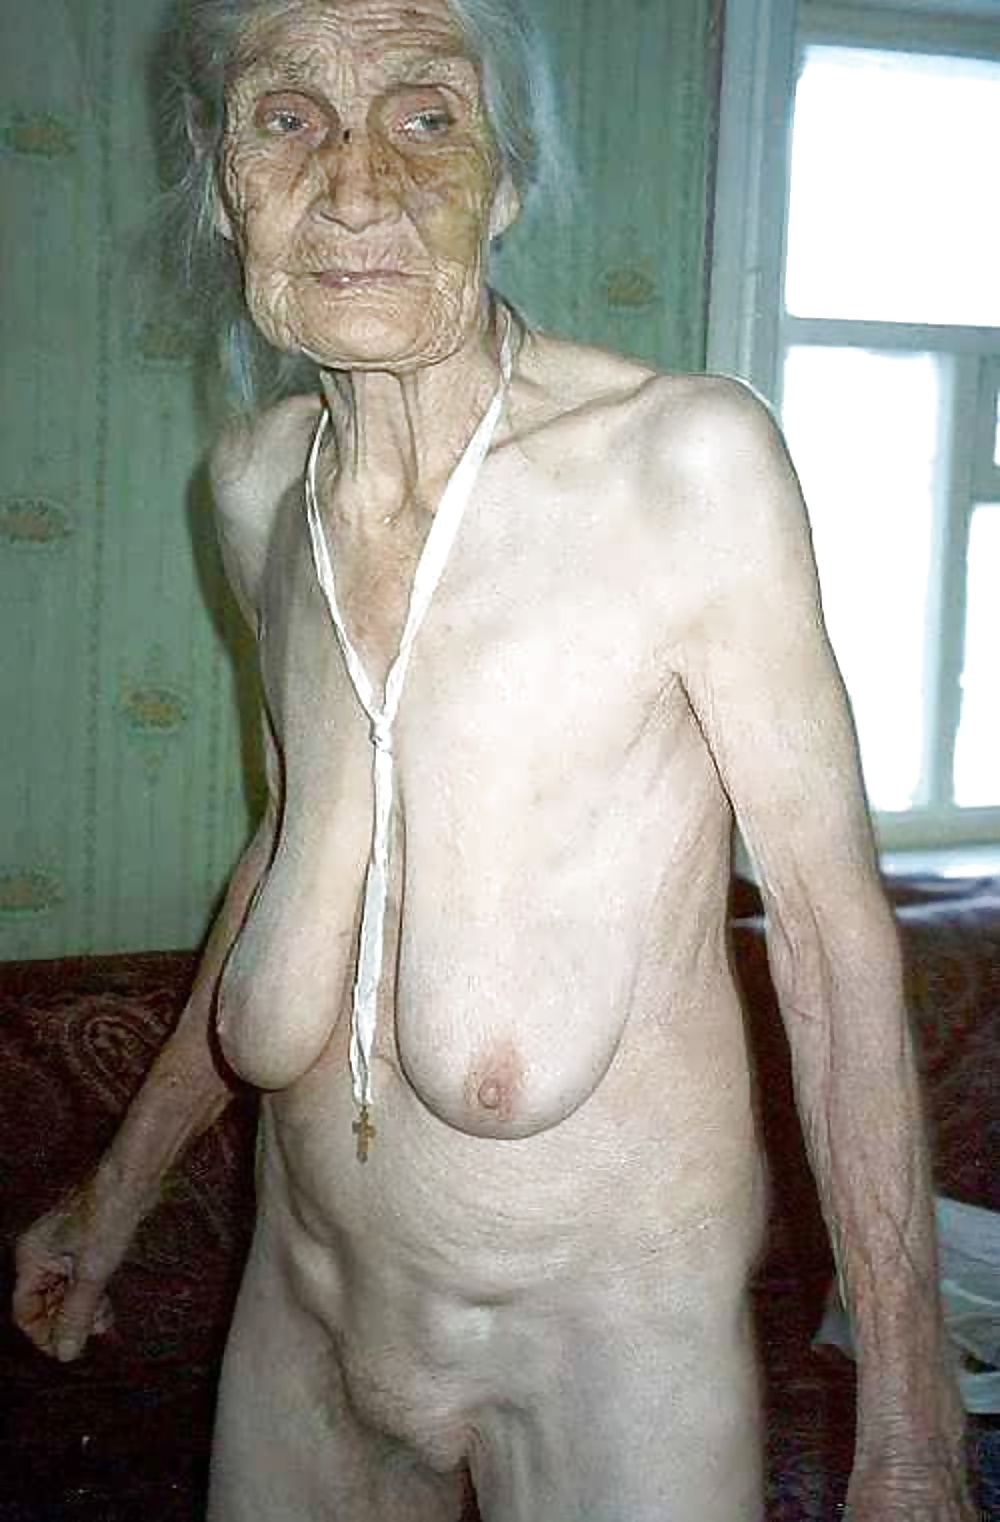 More related grandma wrinkled tit.